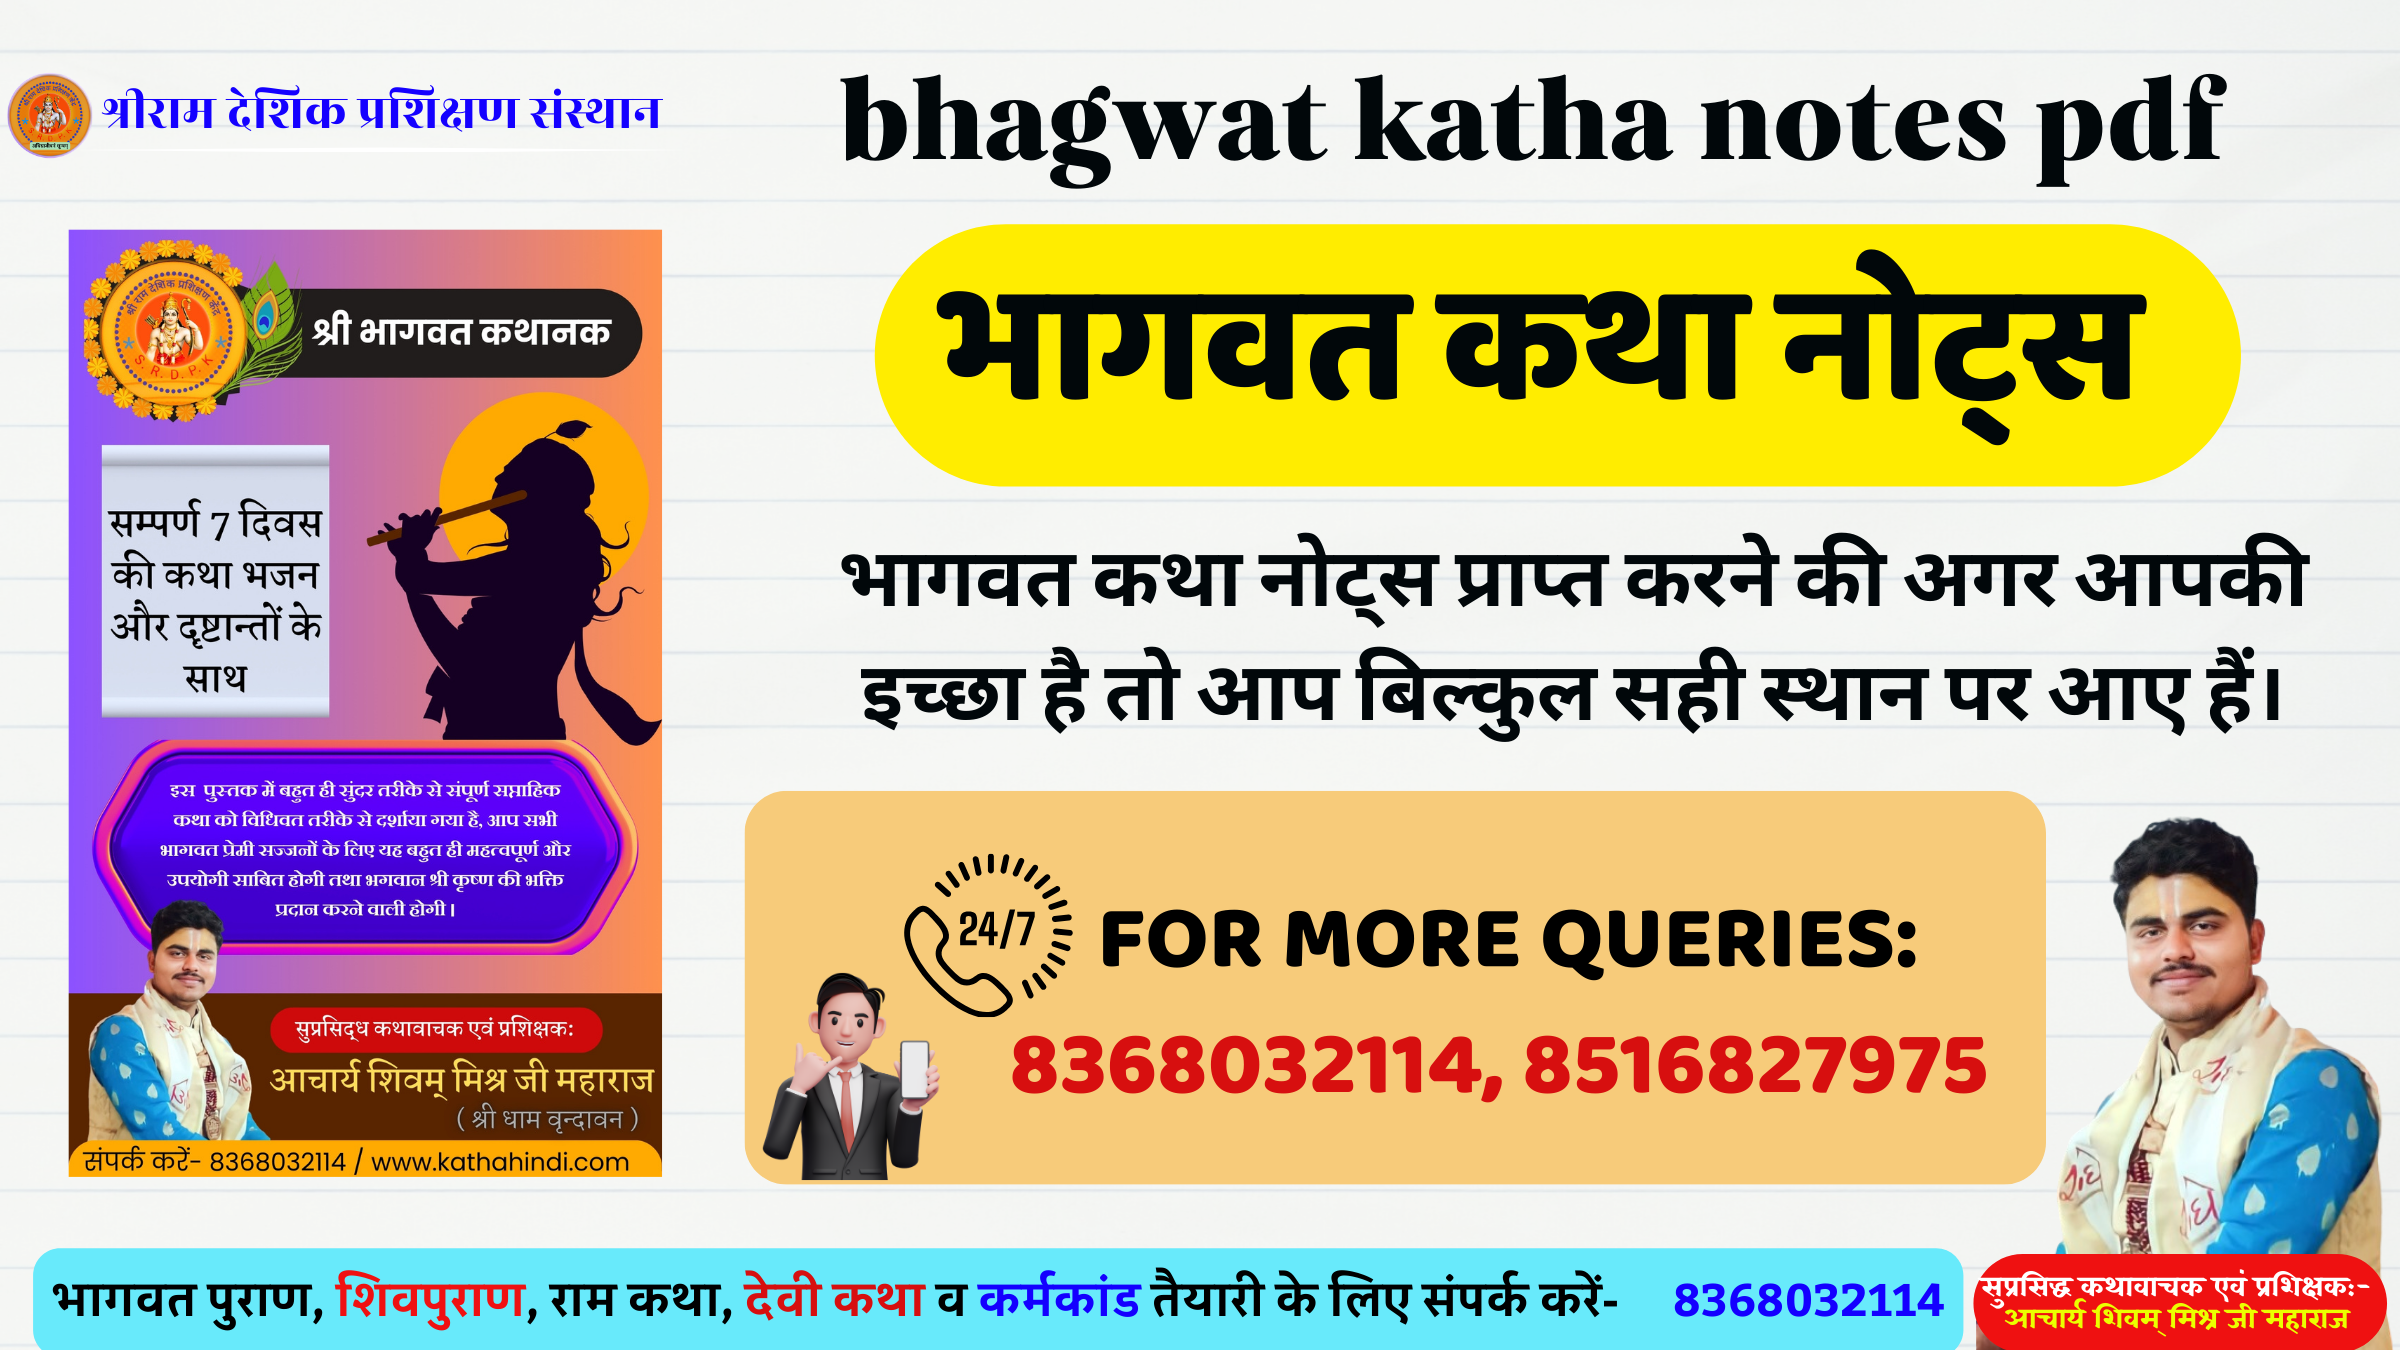 भागवत कथा नोट्स bhagwat katha notes pdf